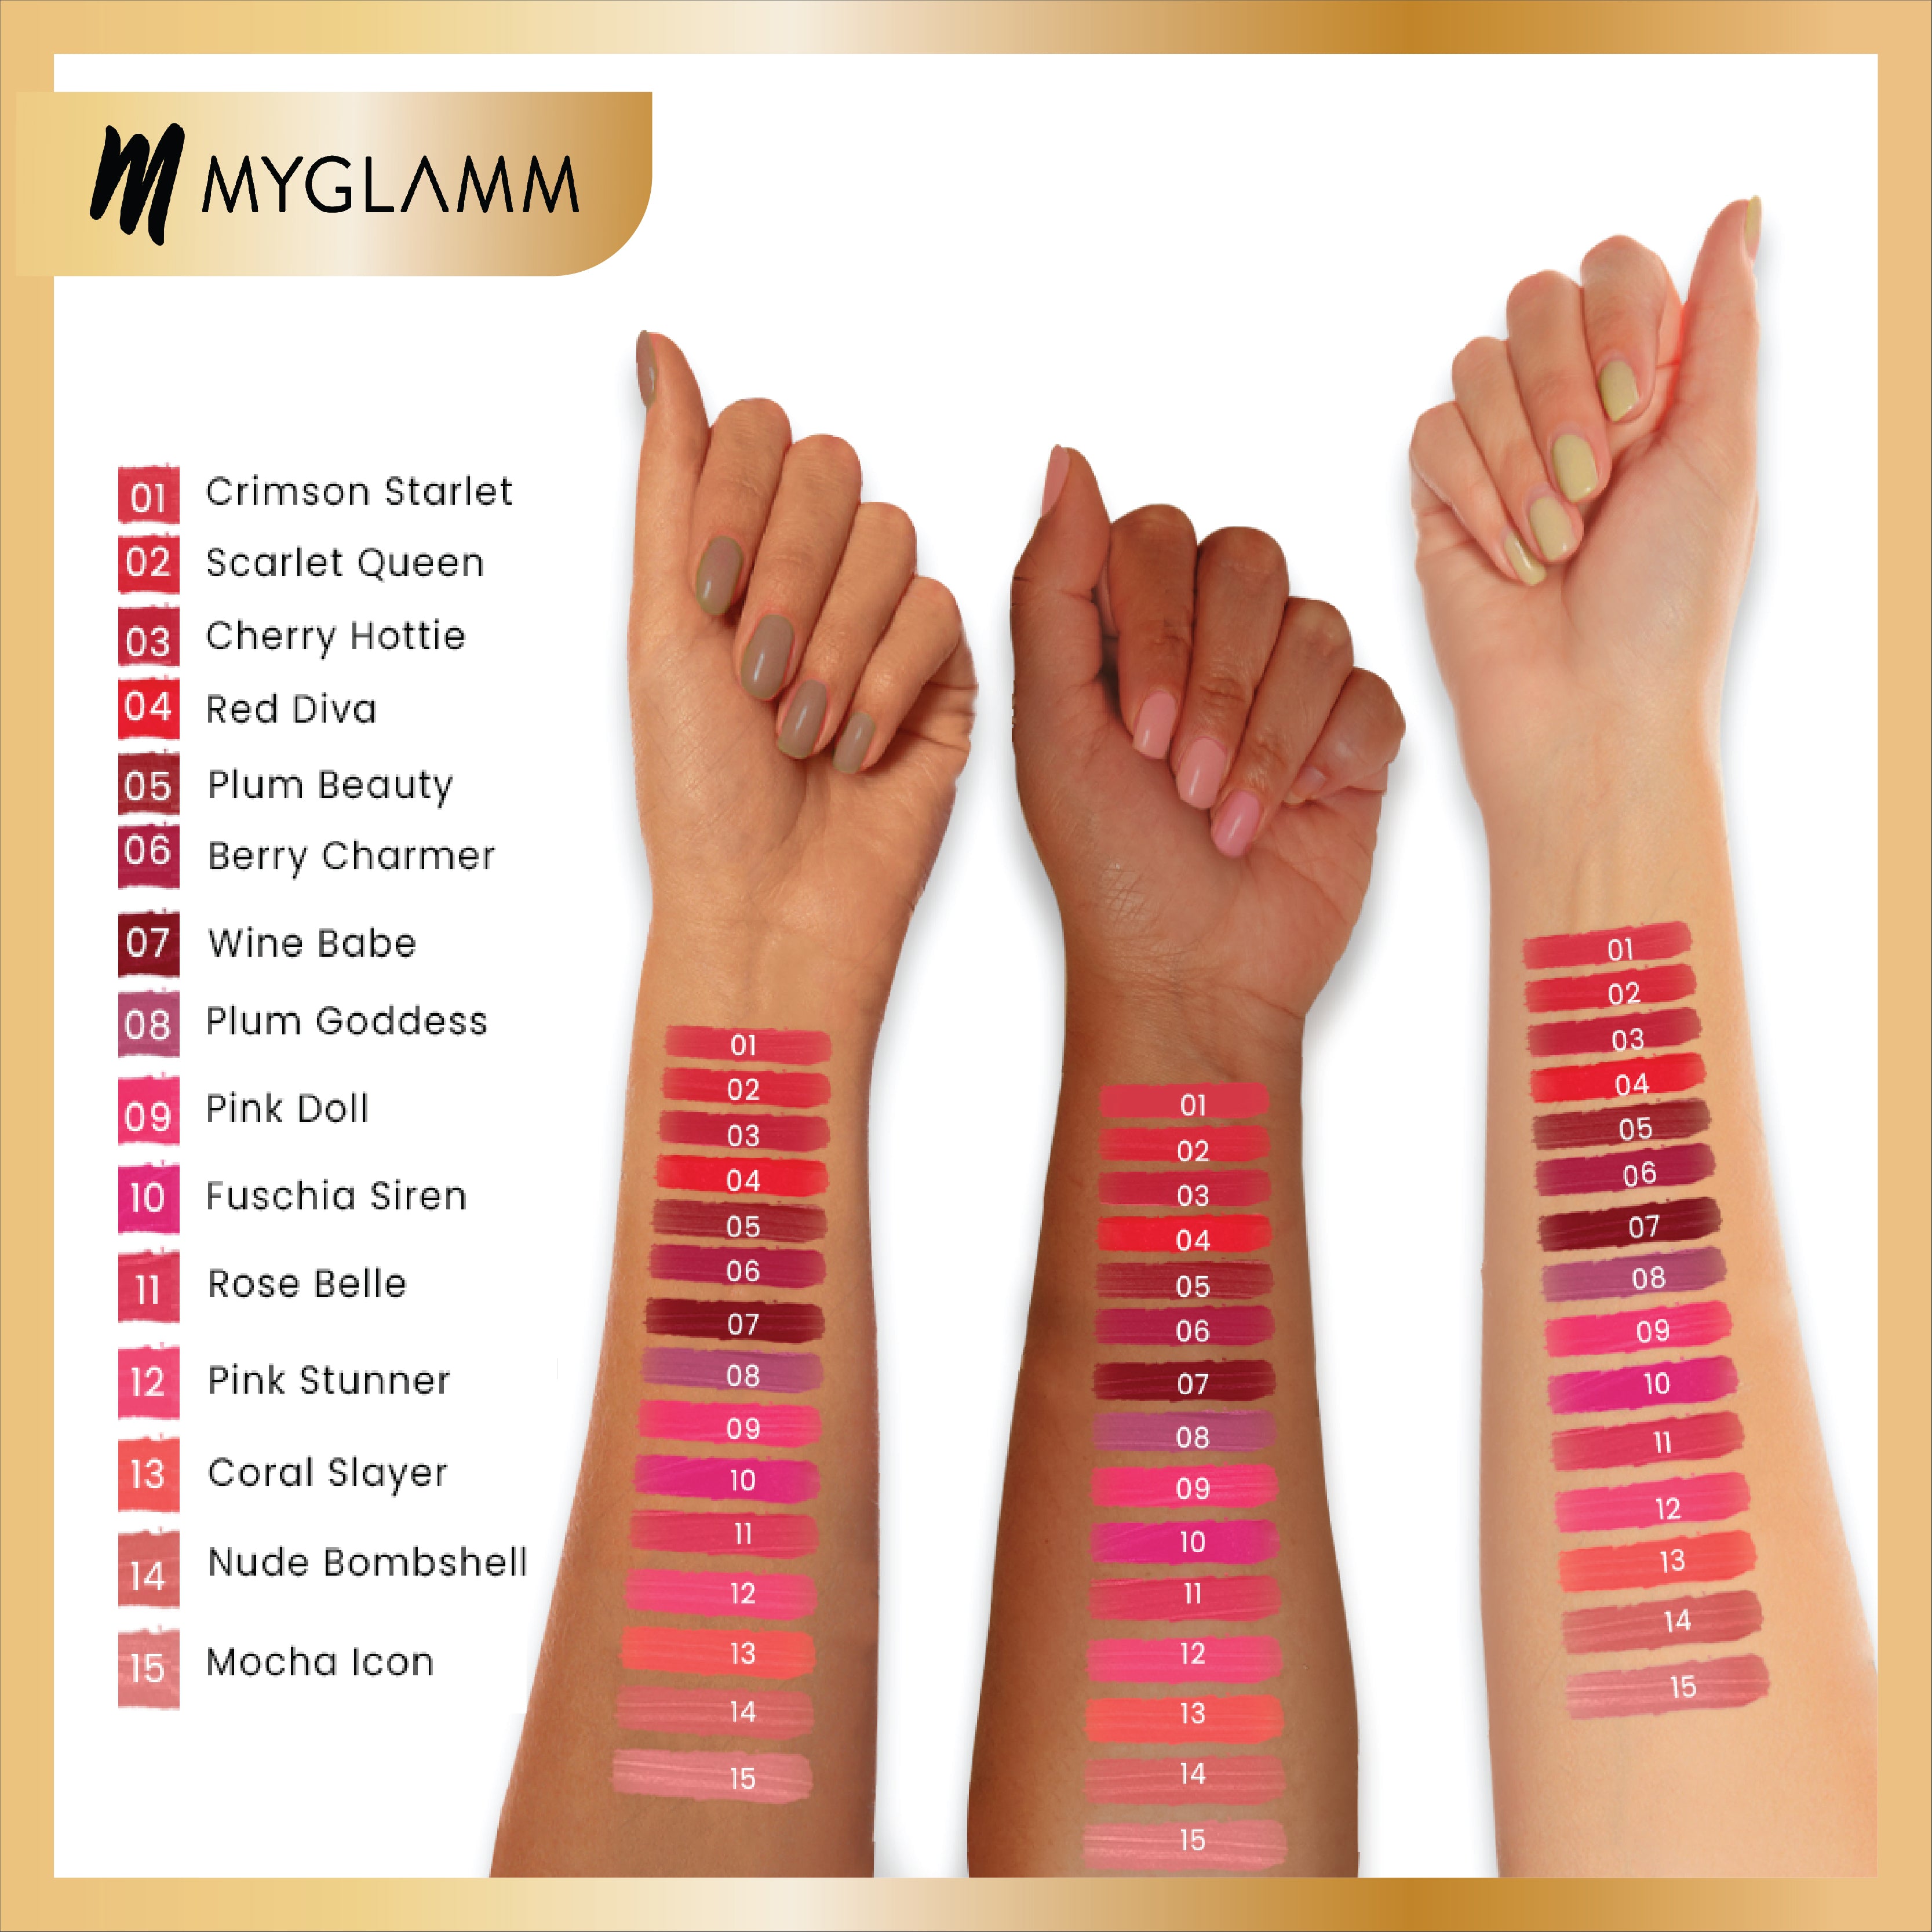 MyGlamm Ultimatte Long Stay Matte Liquid Lipstick-Fuchsia Siren-2.5ml